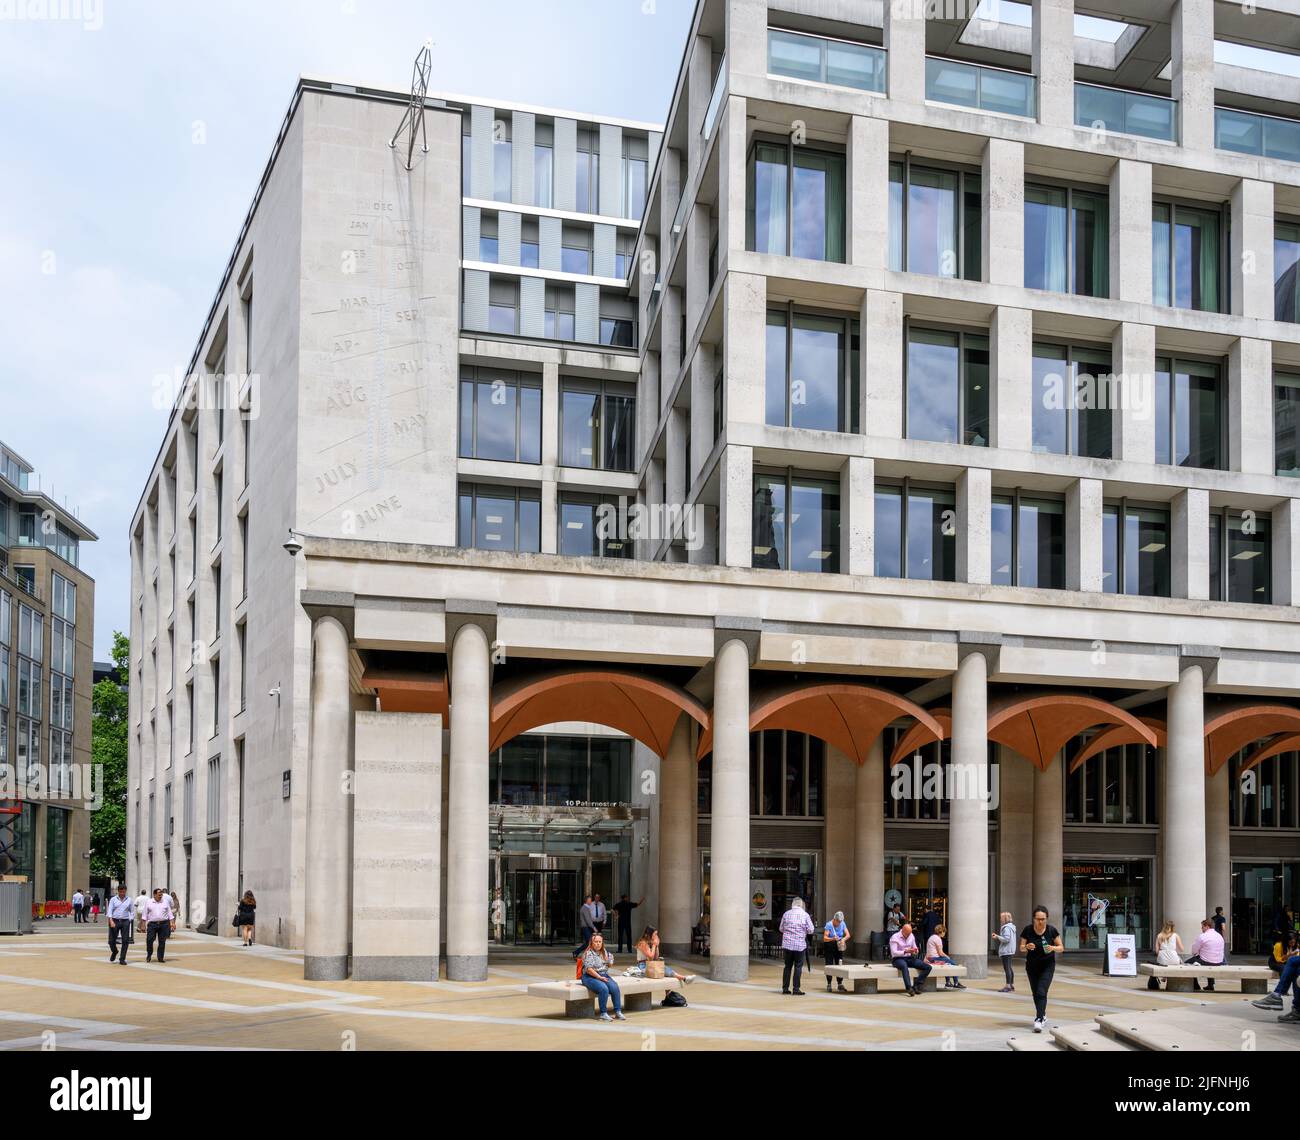 El edificio de la Bolsa de Londres, Paternoster Square, City of London, Londres, Inglaterra, REINO UNIDO Foto de stock